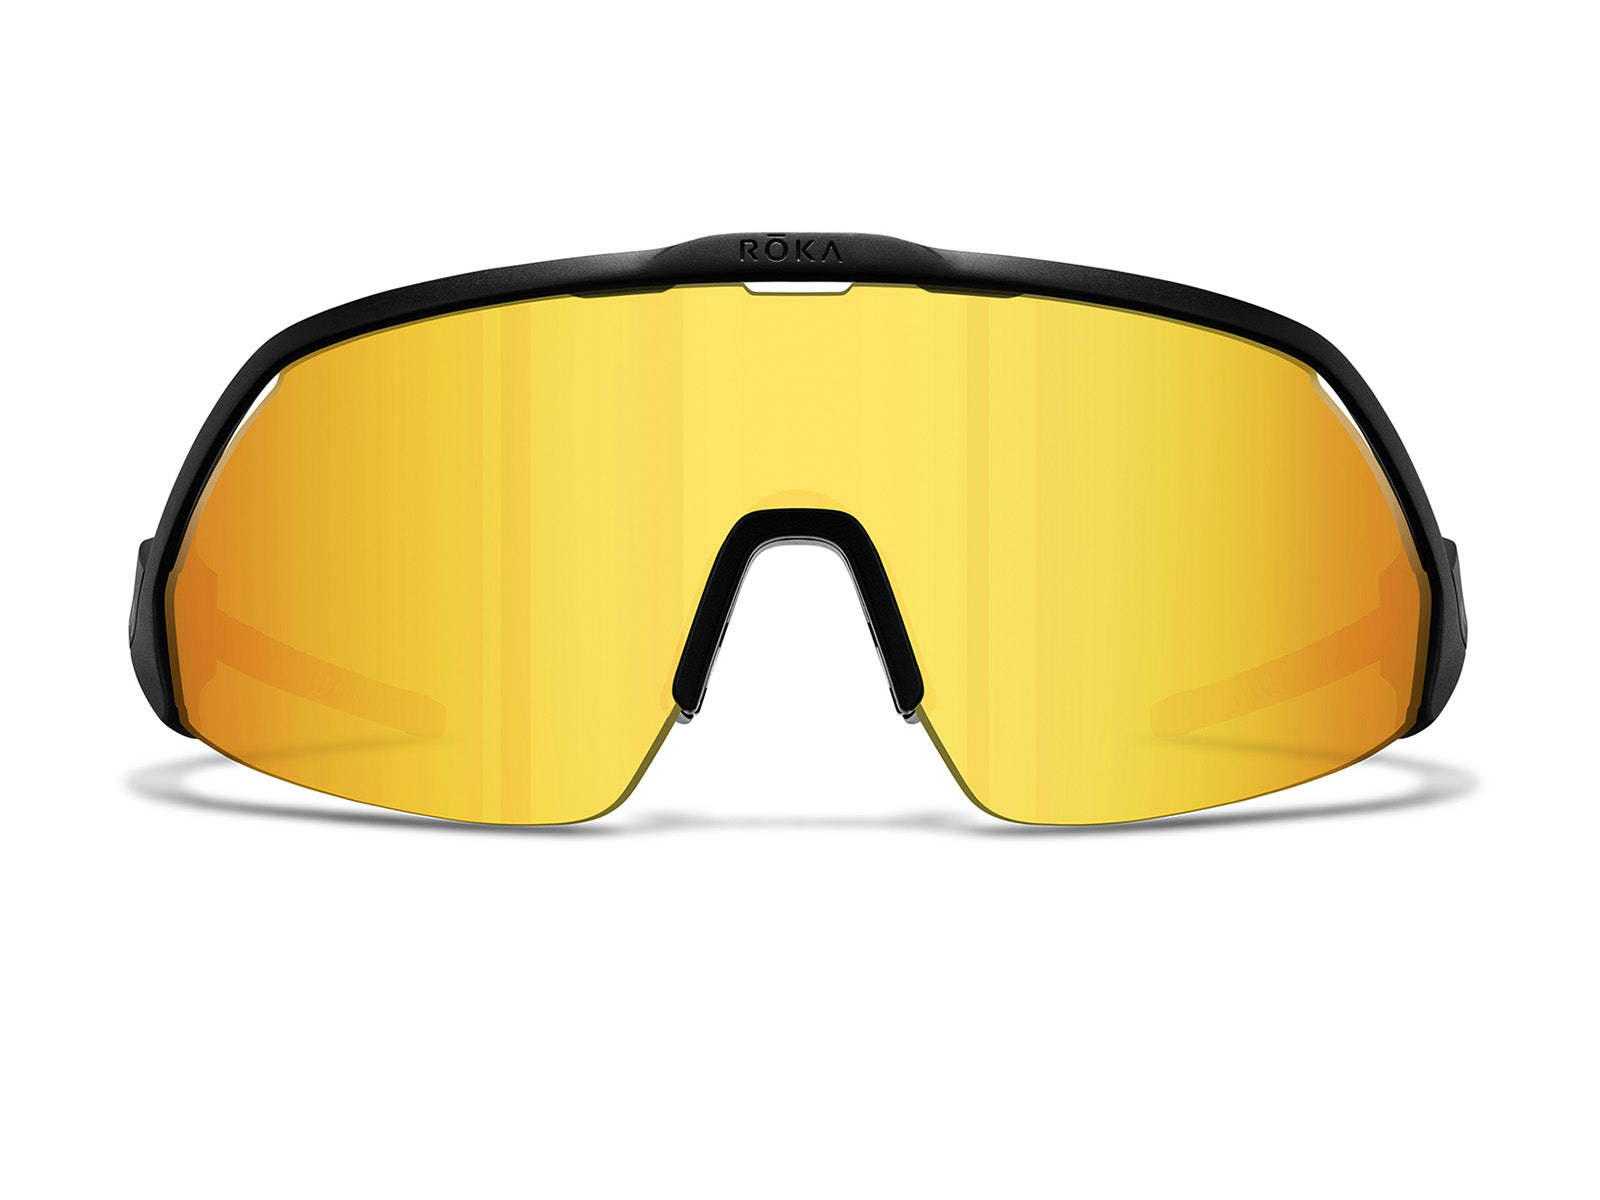 Ski Sunglasses - Snowboarding Sunglasses